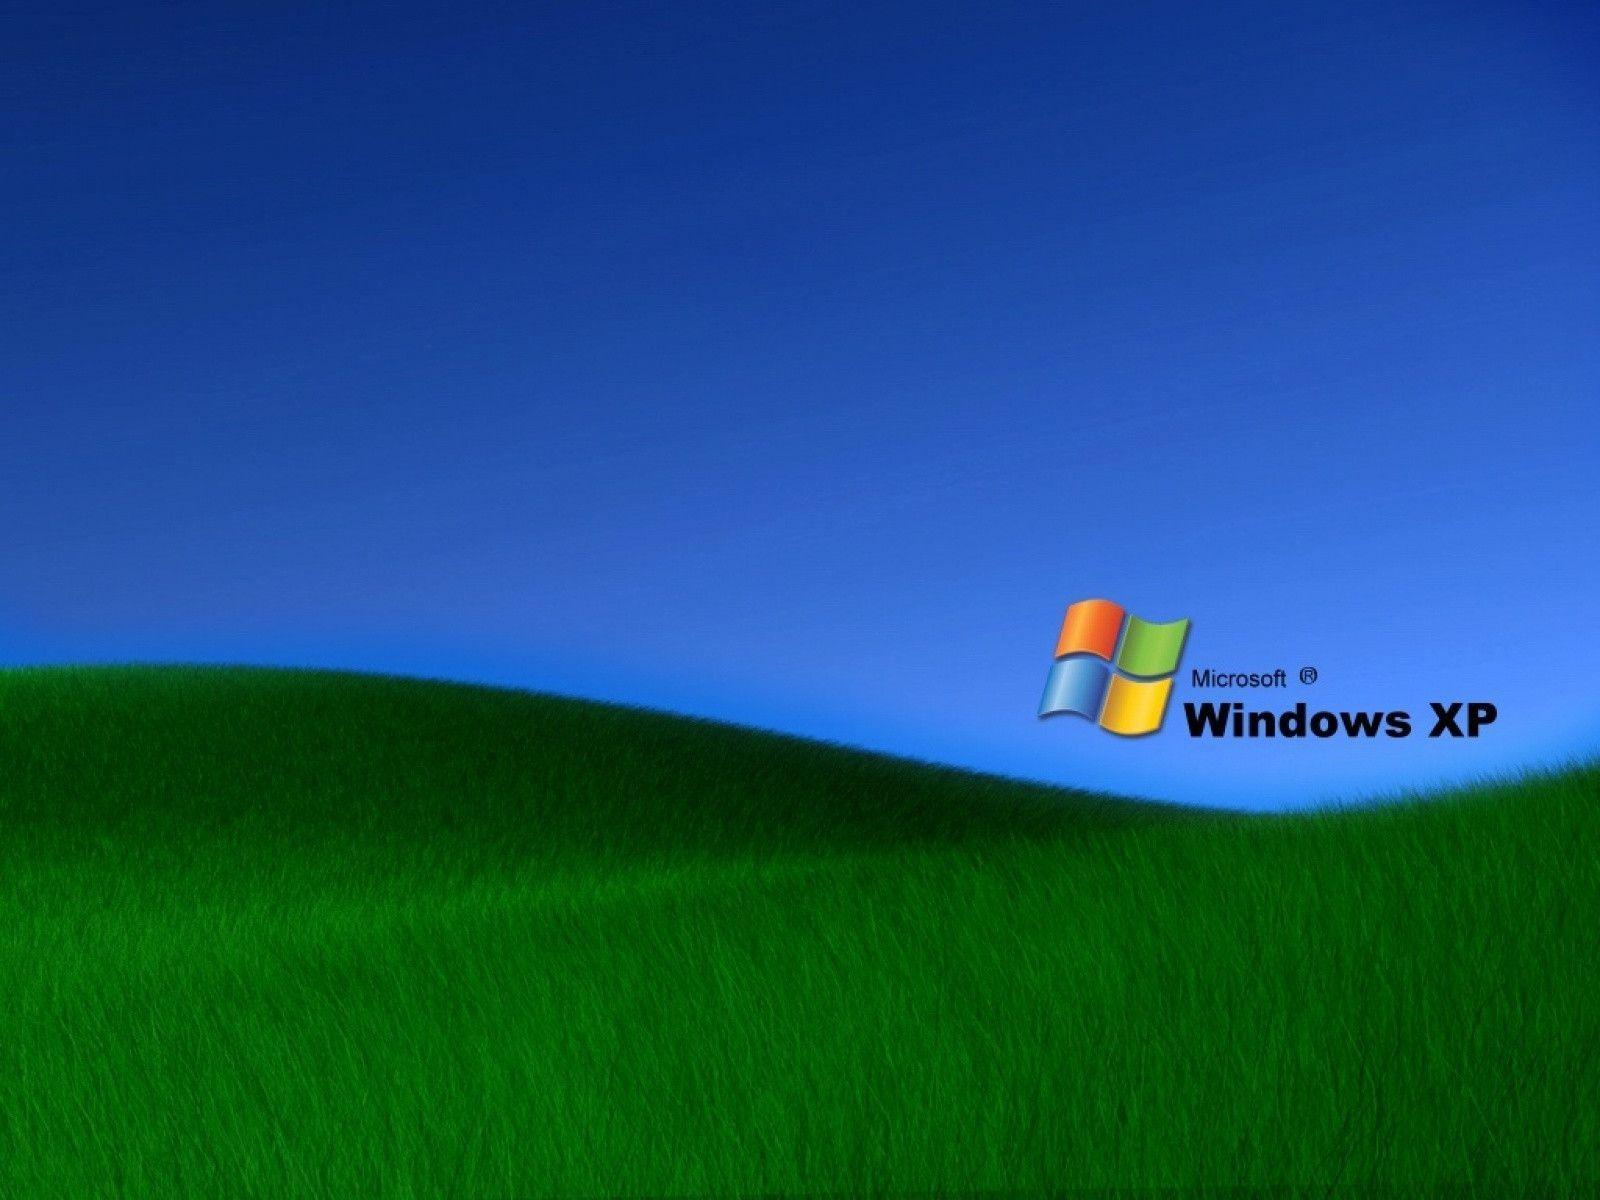 Abstract Wallpaper for Windows XP. Free Desk Wallpaper